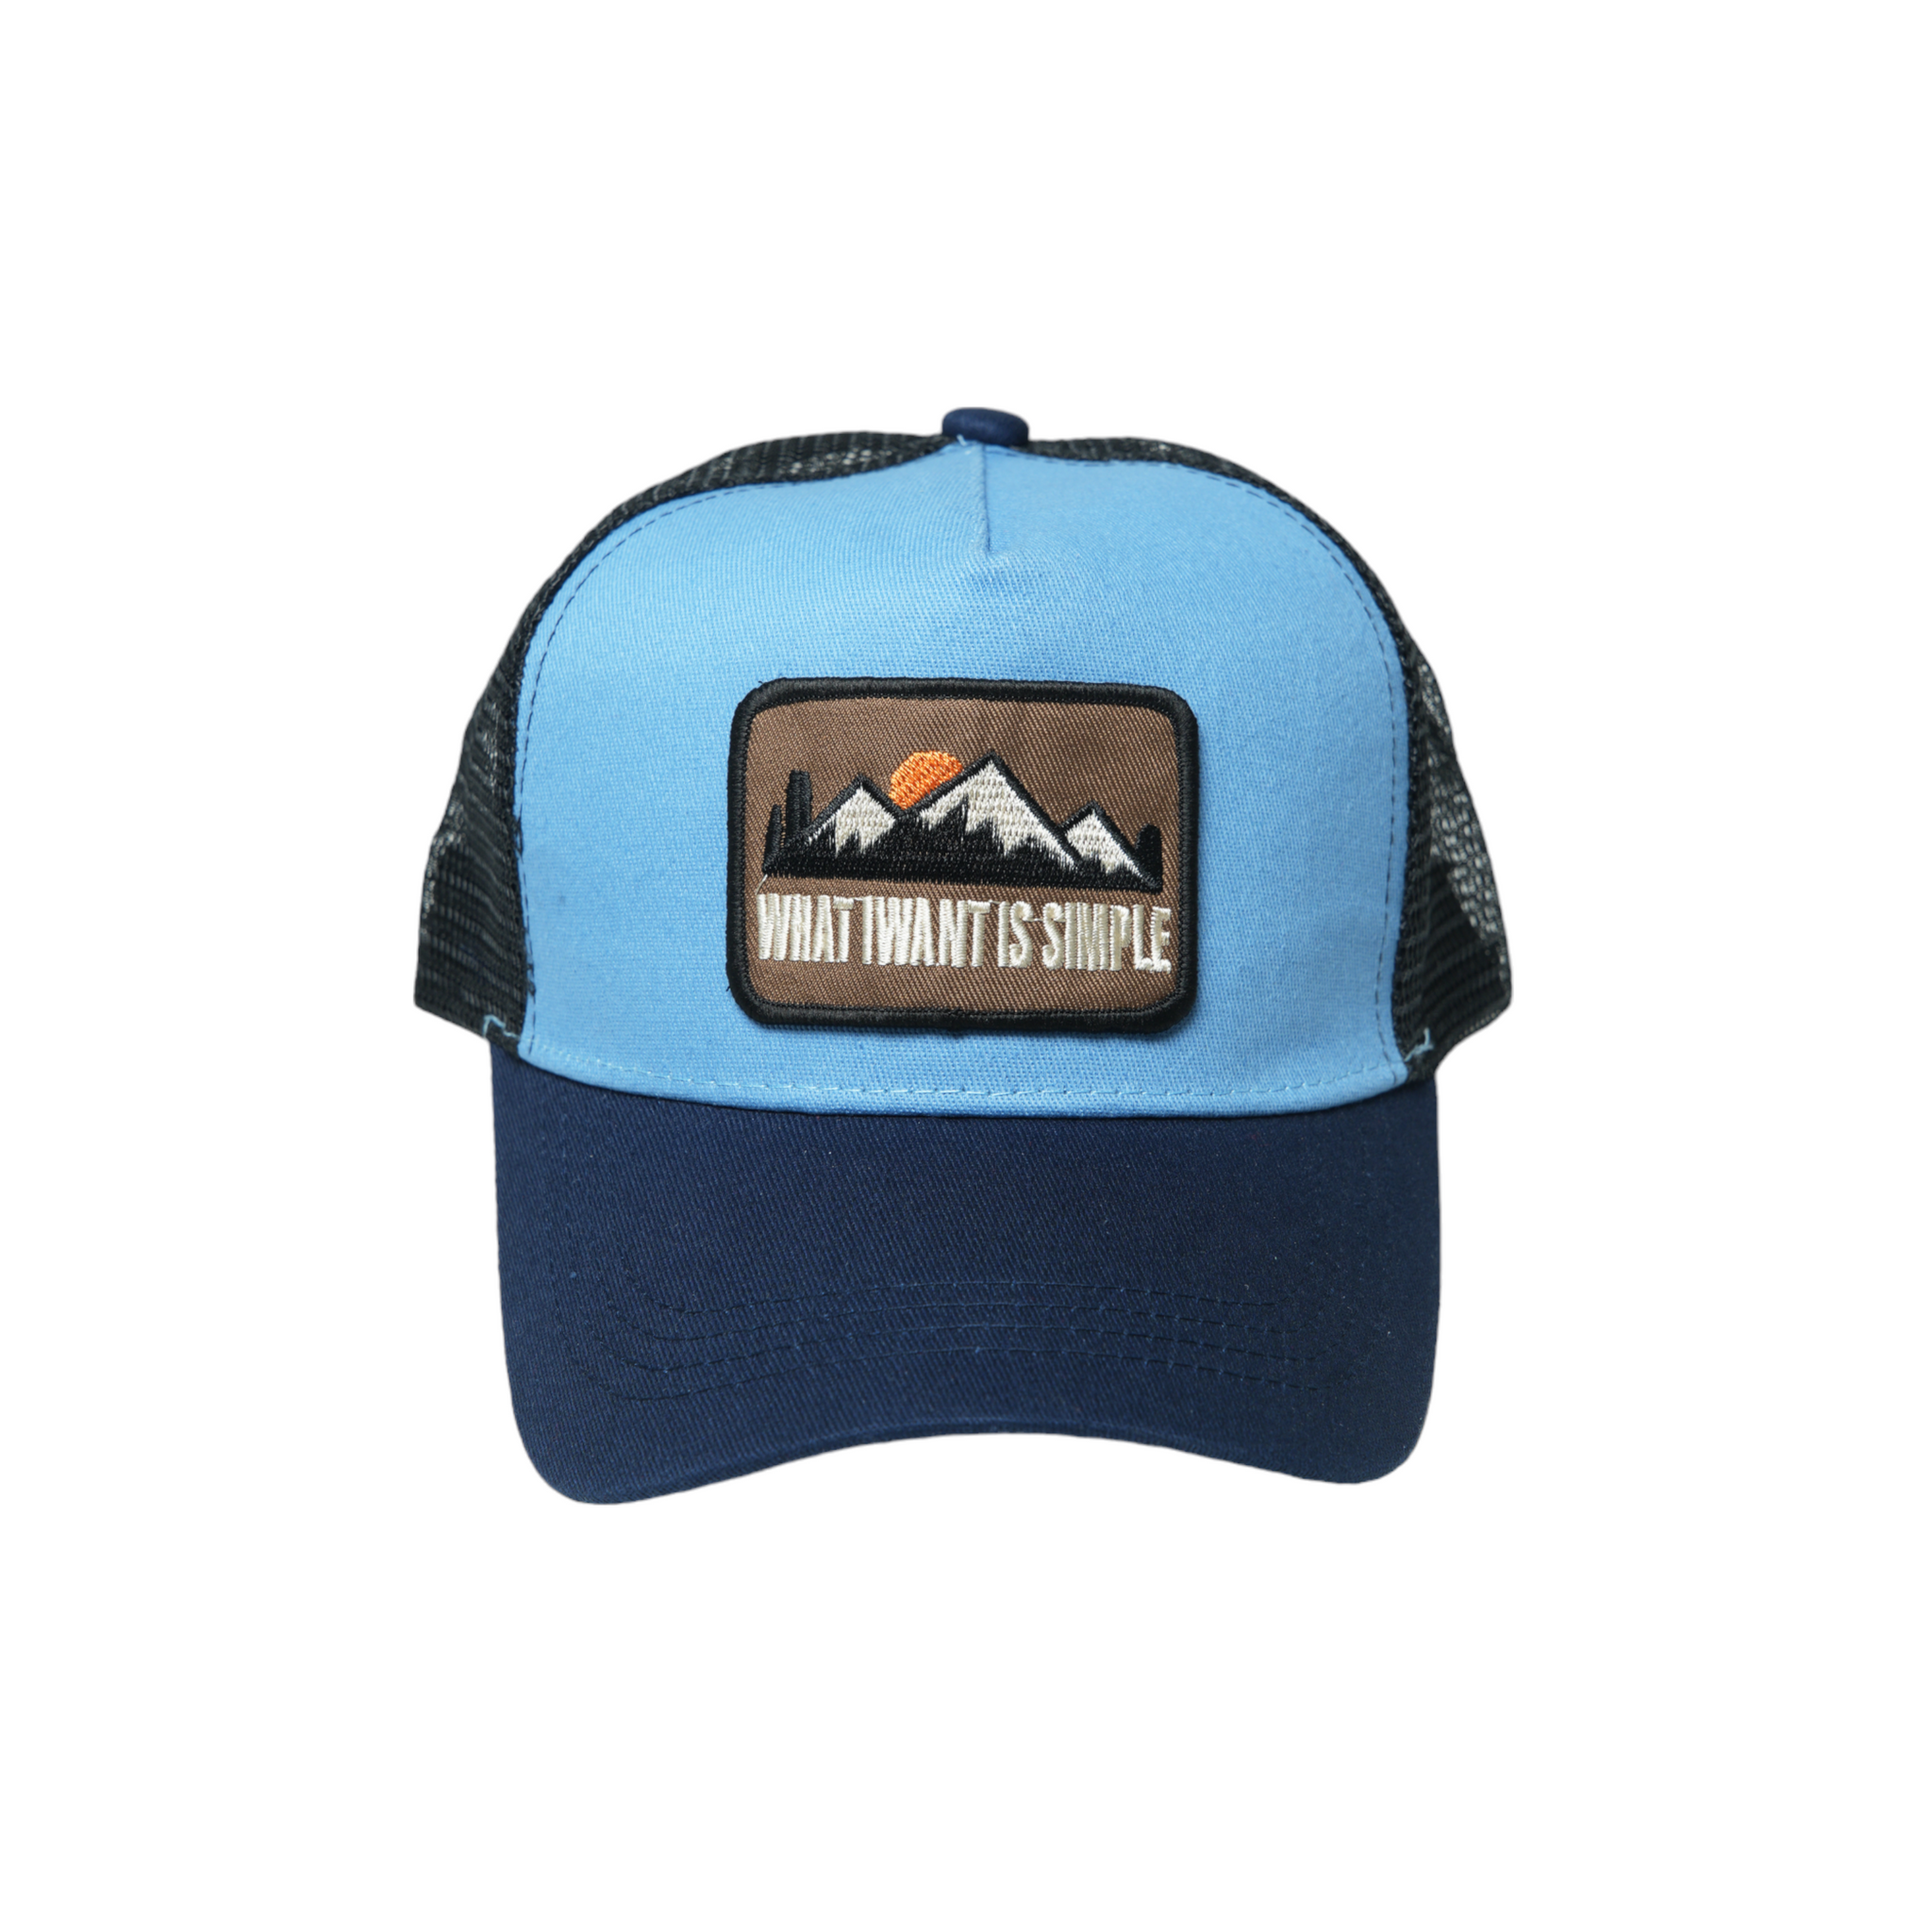 Chokore Peak Patch Baseball Cap (Navy Blue & Sky Blue)